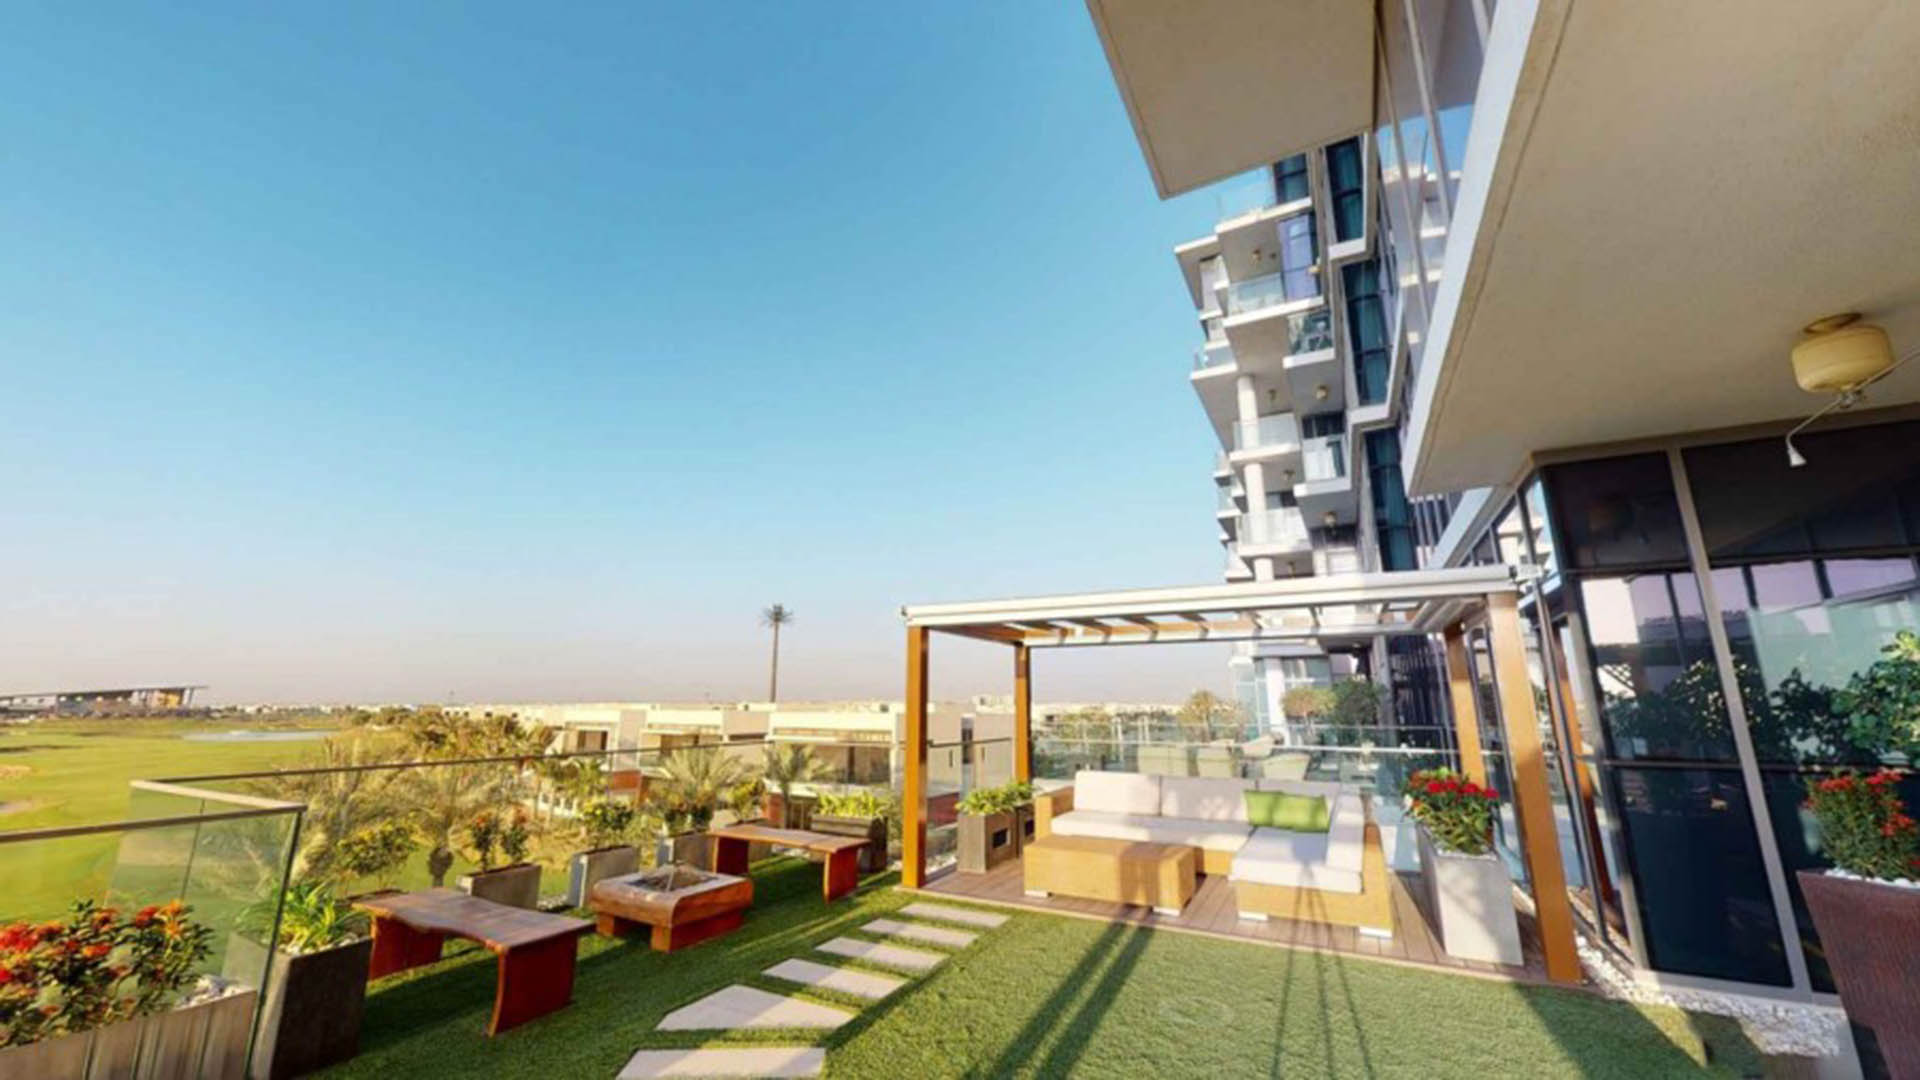 ALL SEASONS by Damac Properties in DAMAC Hills, Dubai - 2